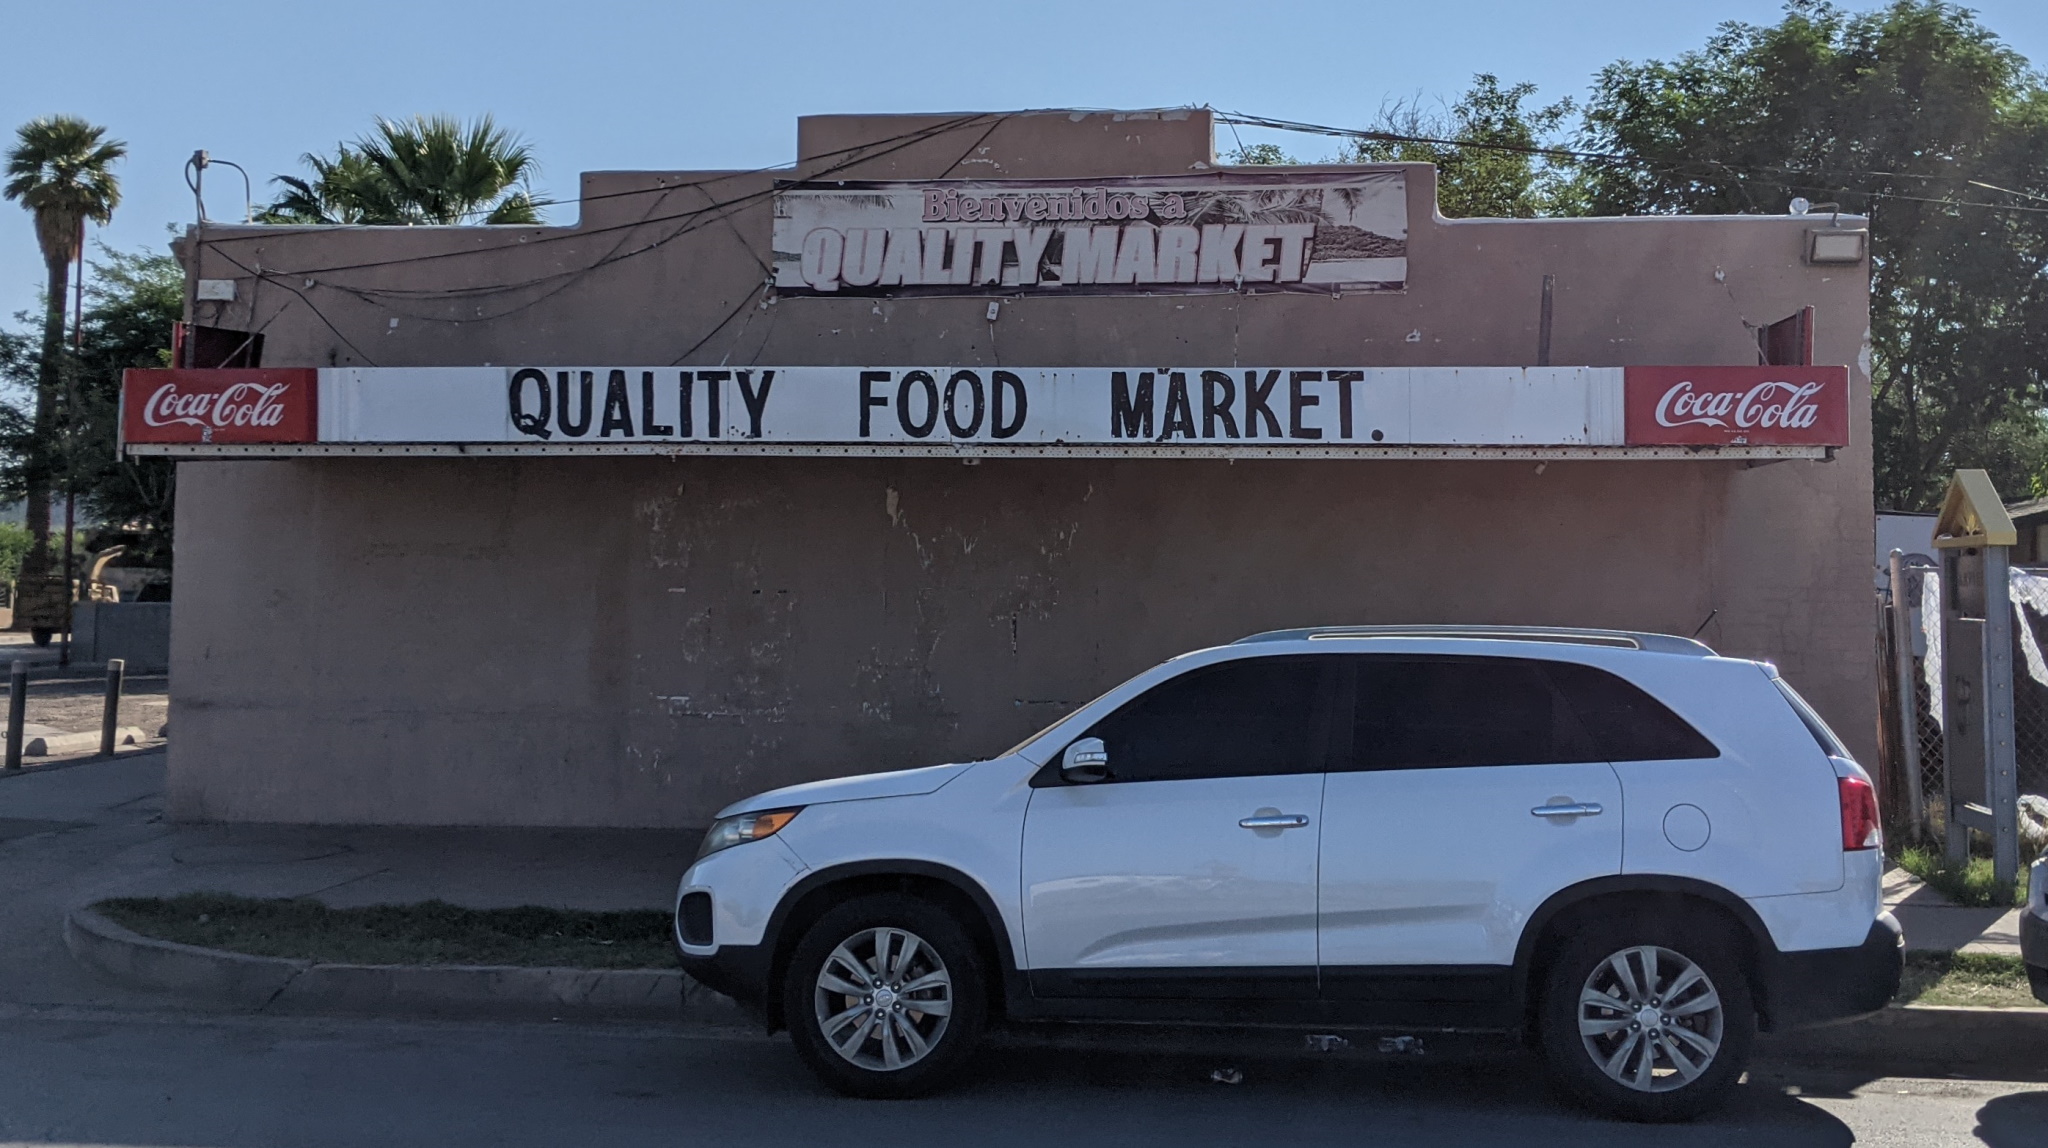 Quality Food Market